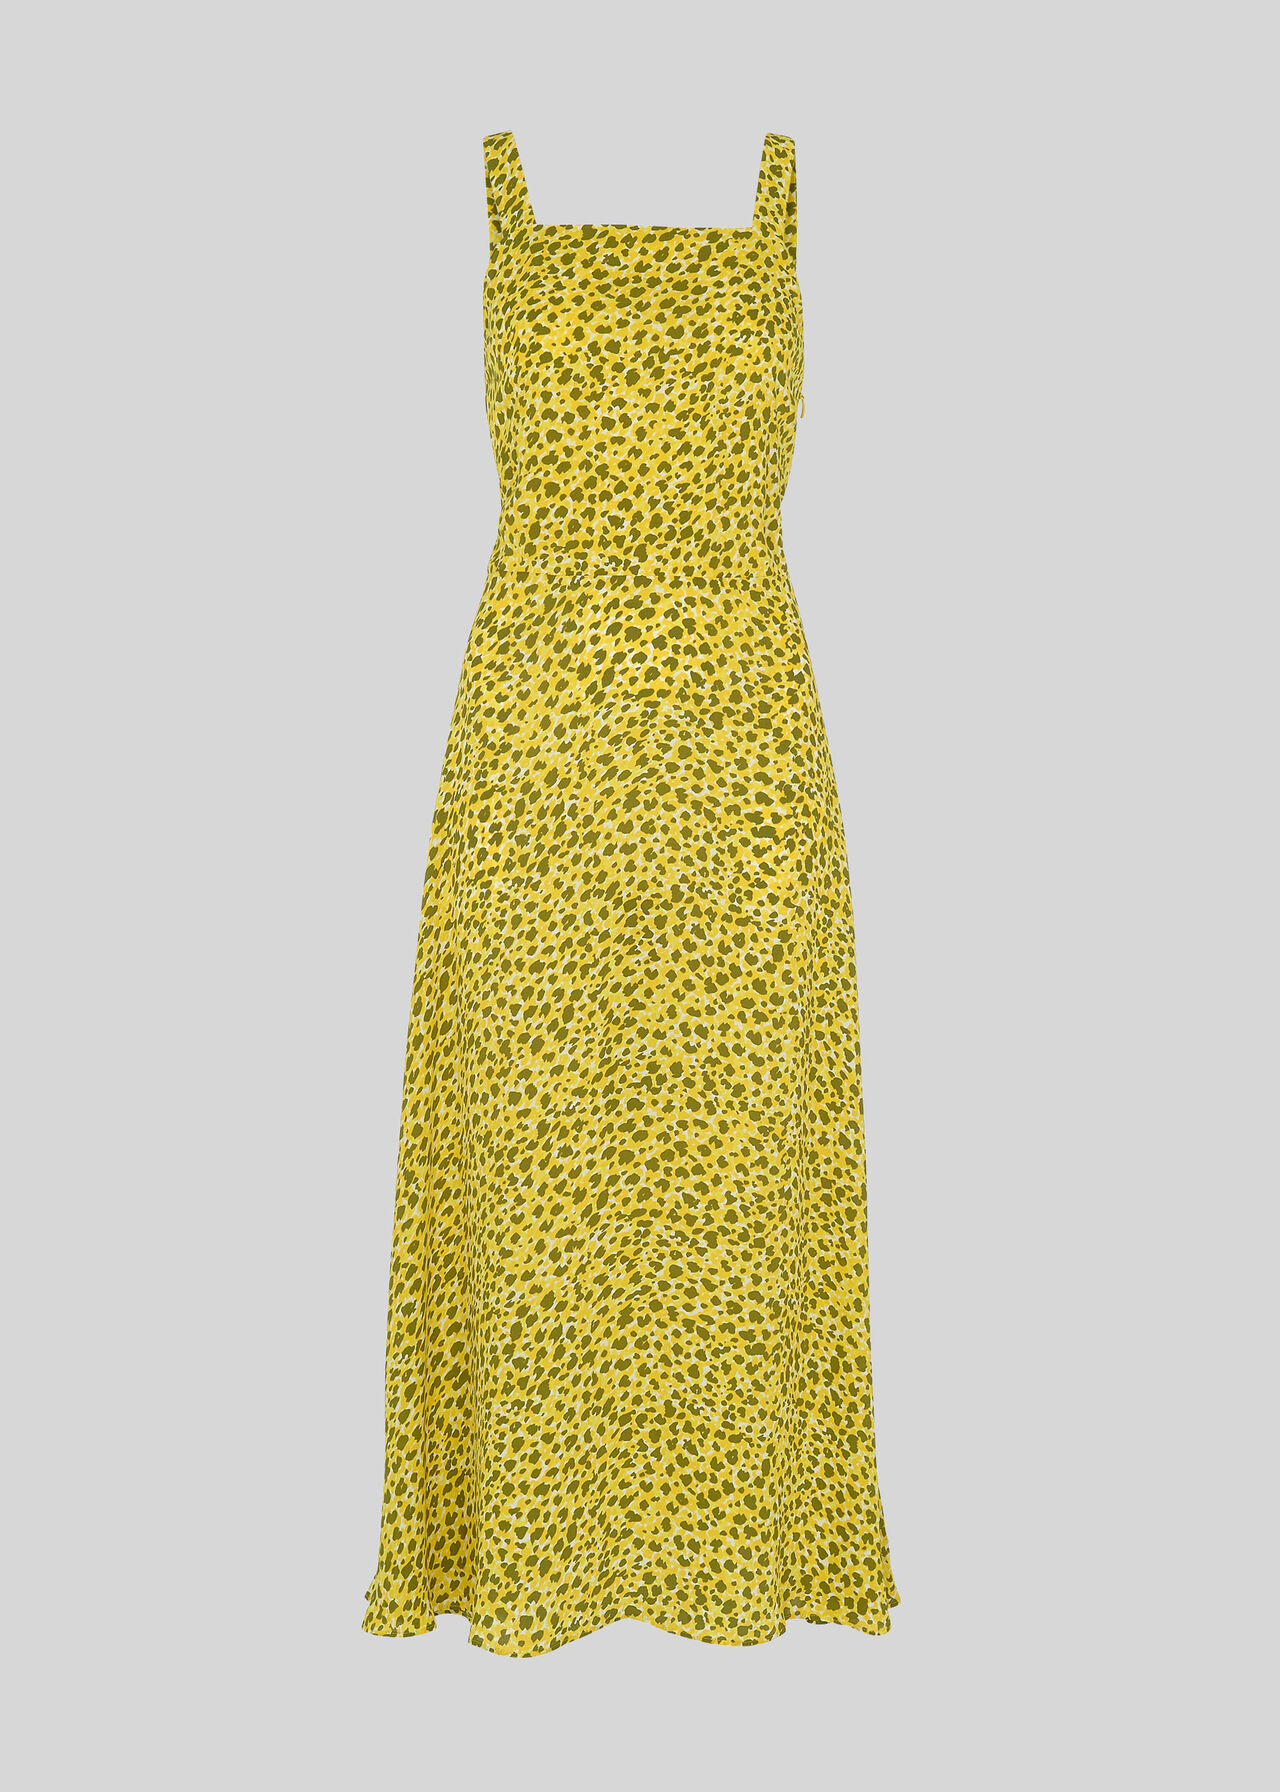 Llora Clouded Leopard Dress Yellow/Multi